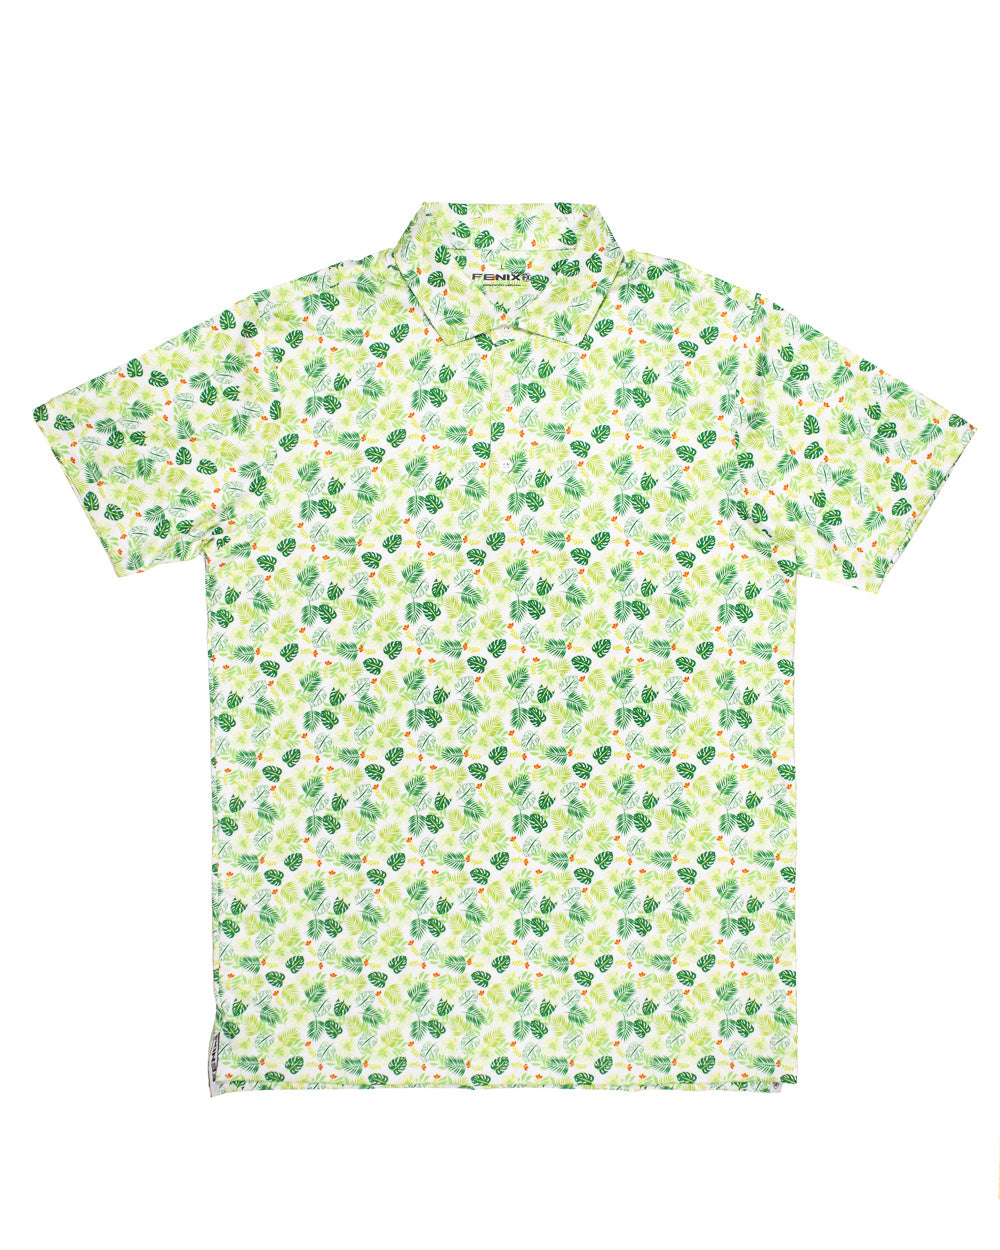 LAHAINO LIME GREEN ■ フェニックス・エクセル ポロシャツ ラハイノ（ライムグリーン）